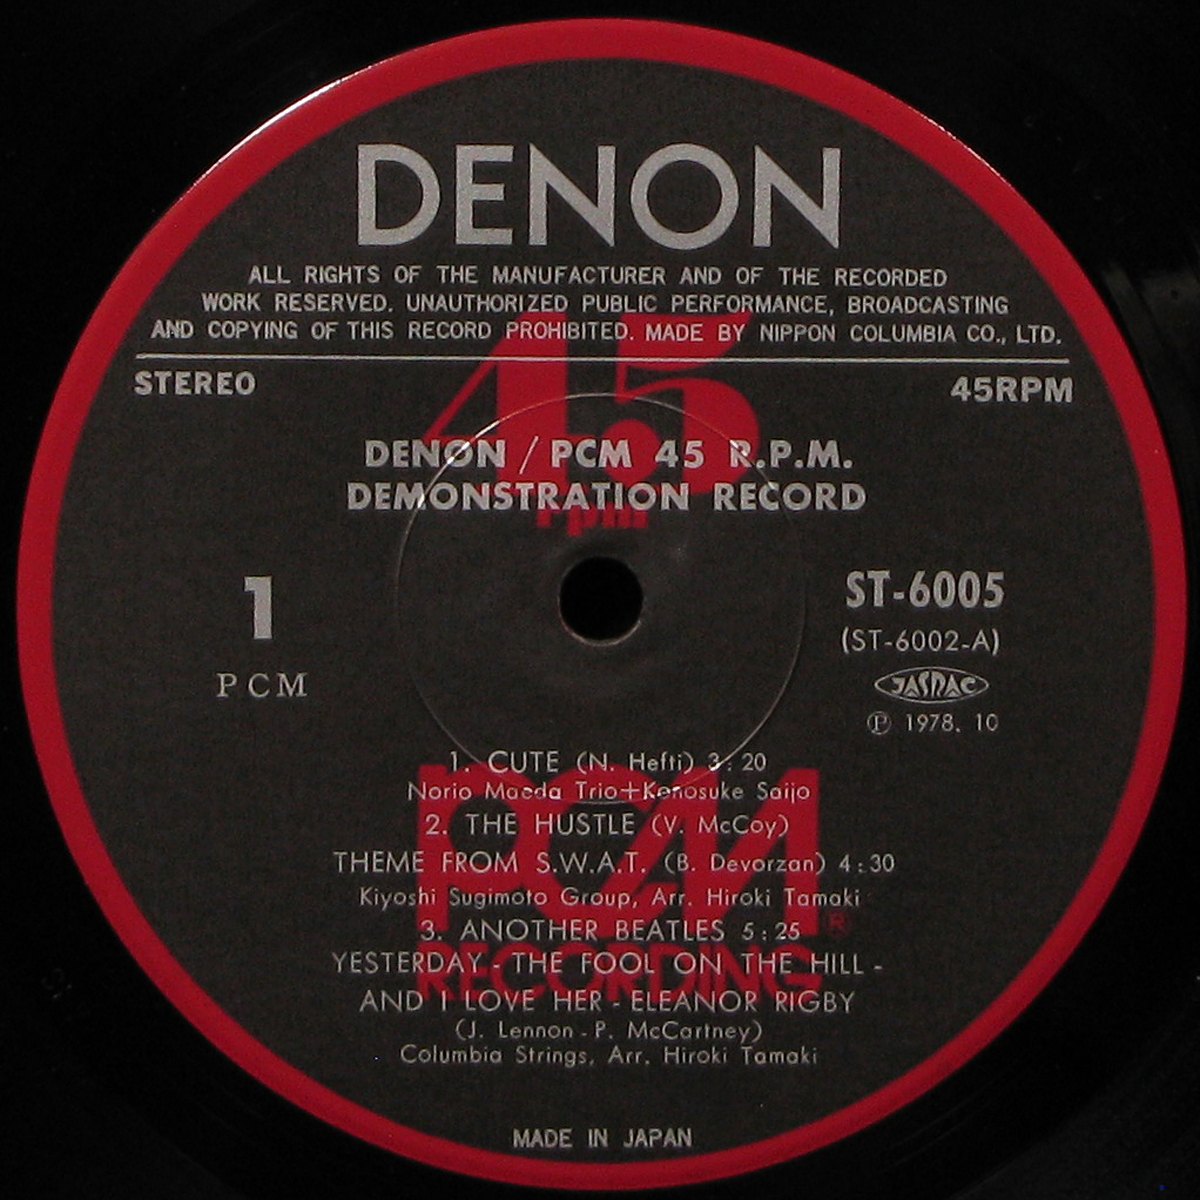 Тестовая Пластинка Demonstration Record - Denon / PCM Recording - 45 R.P.M.  фото 4